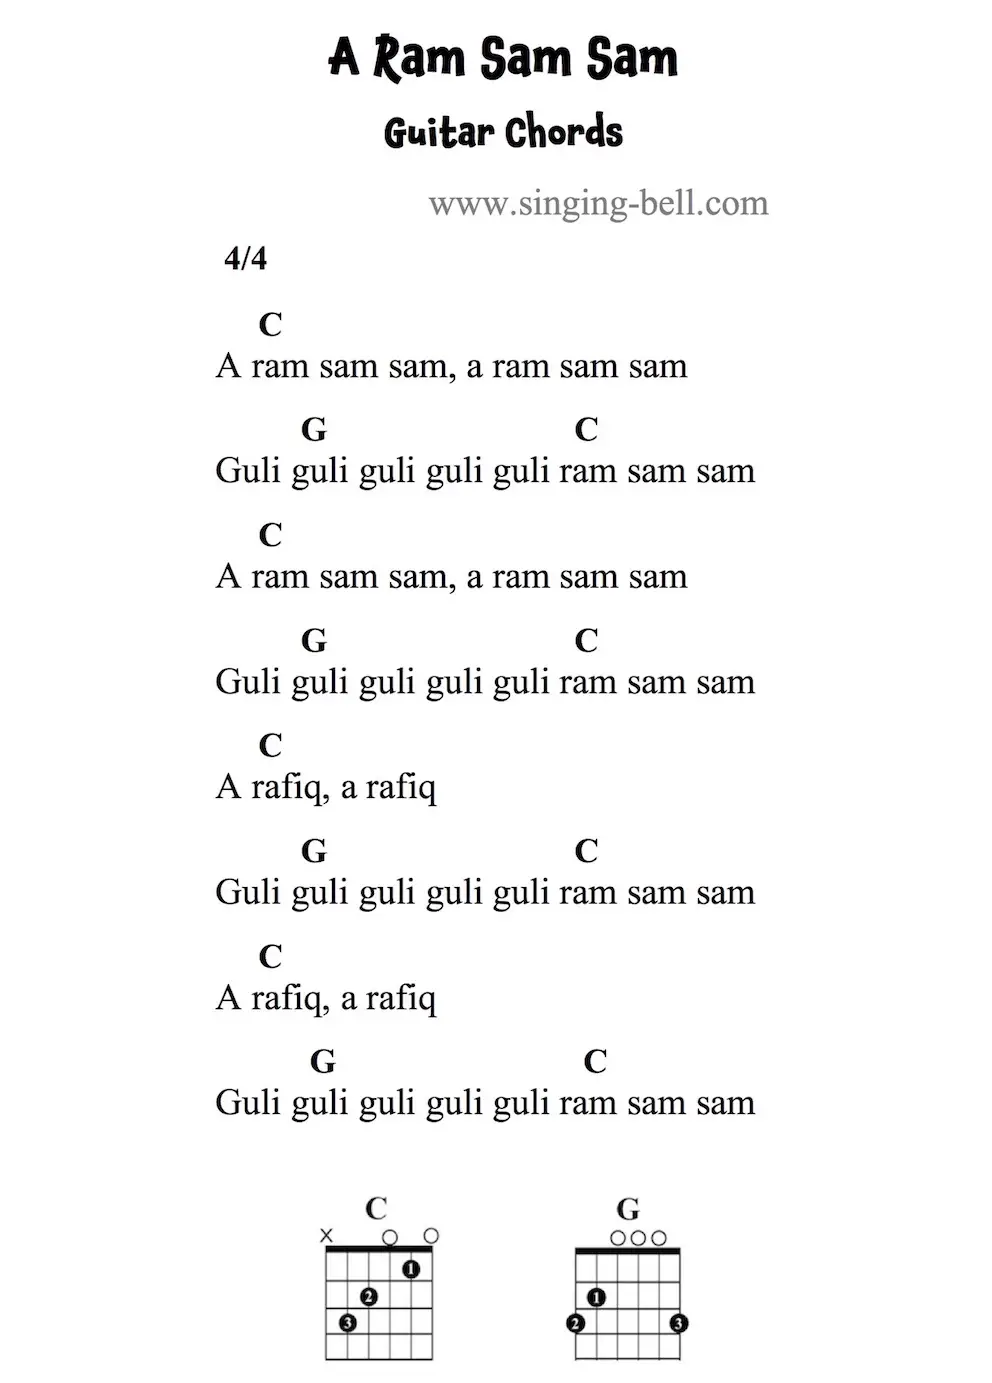 A Ram Sam Sam Guitar Chords and Tabs.